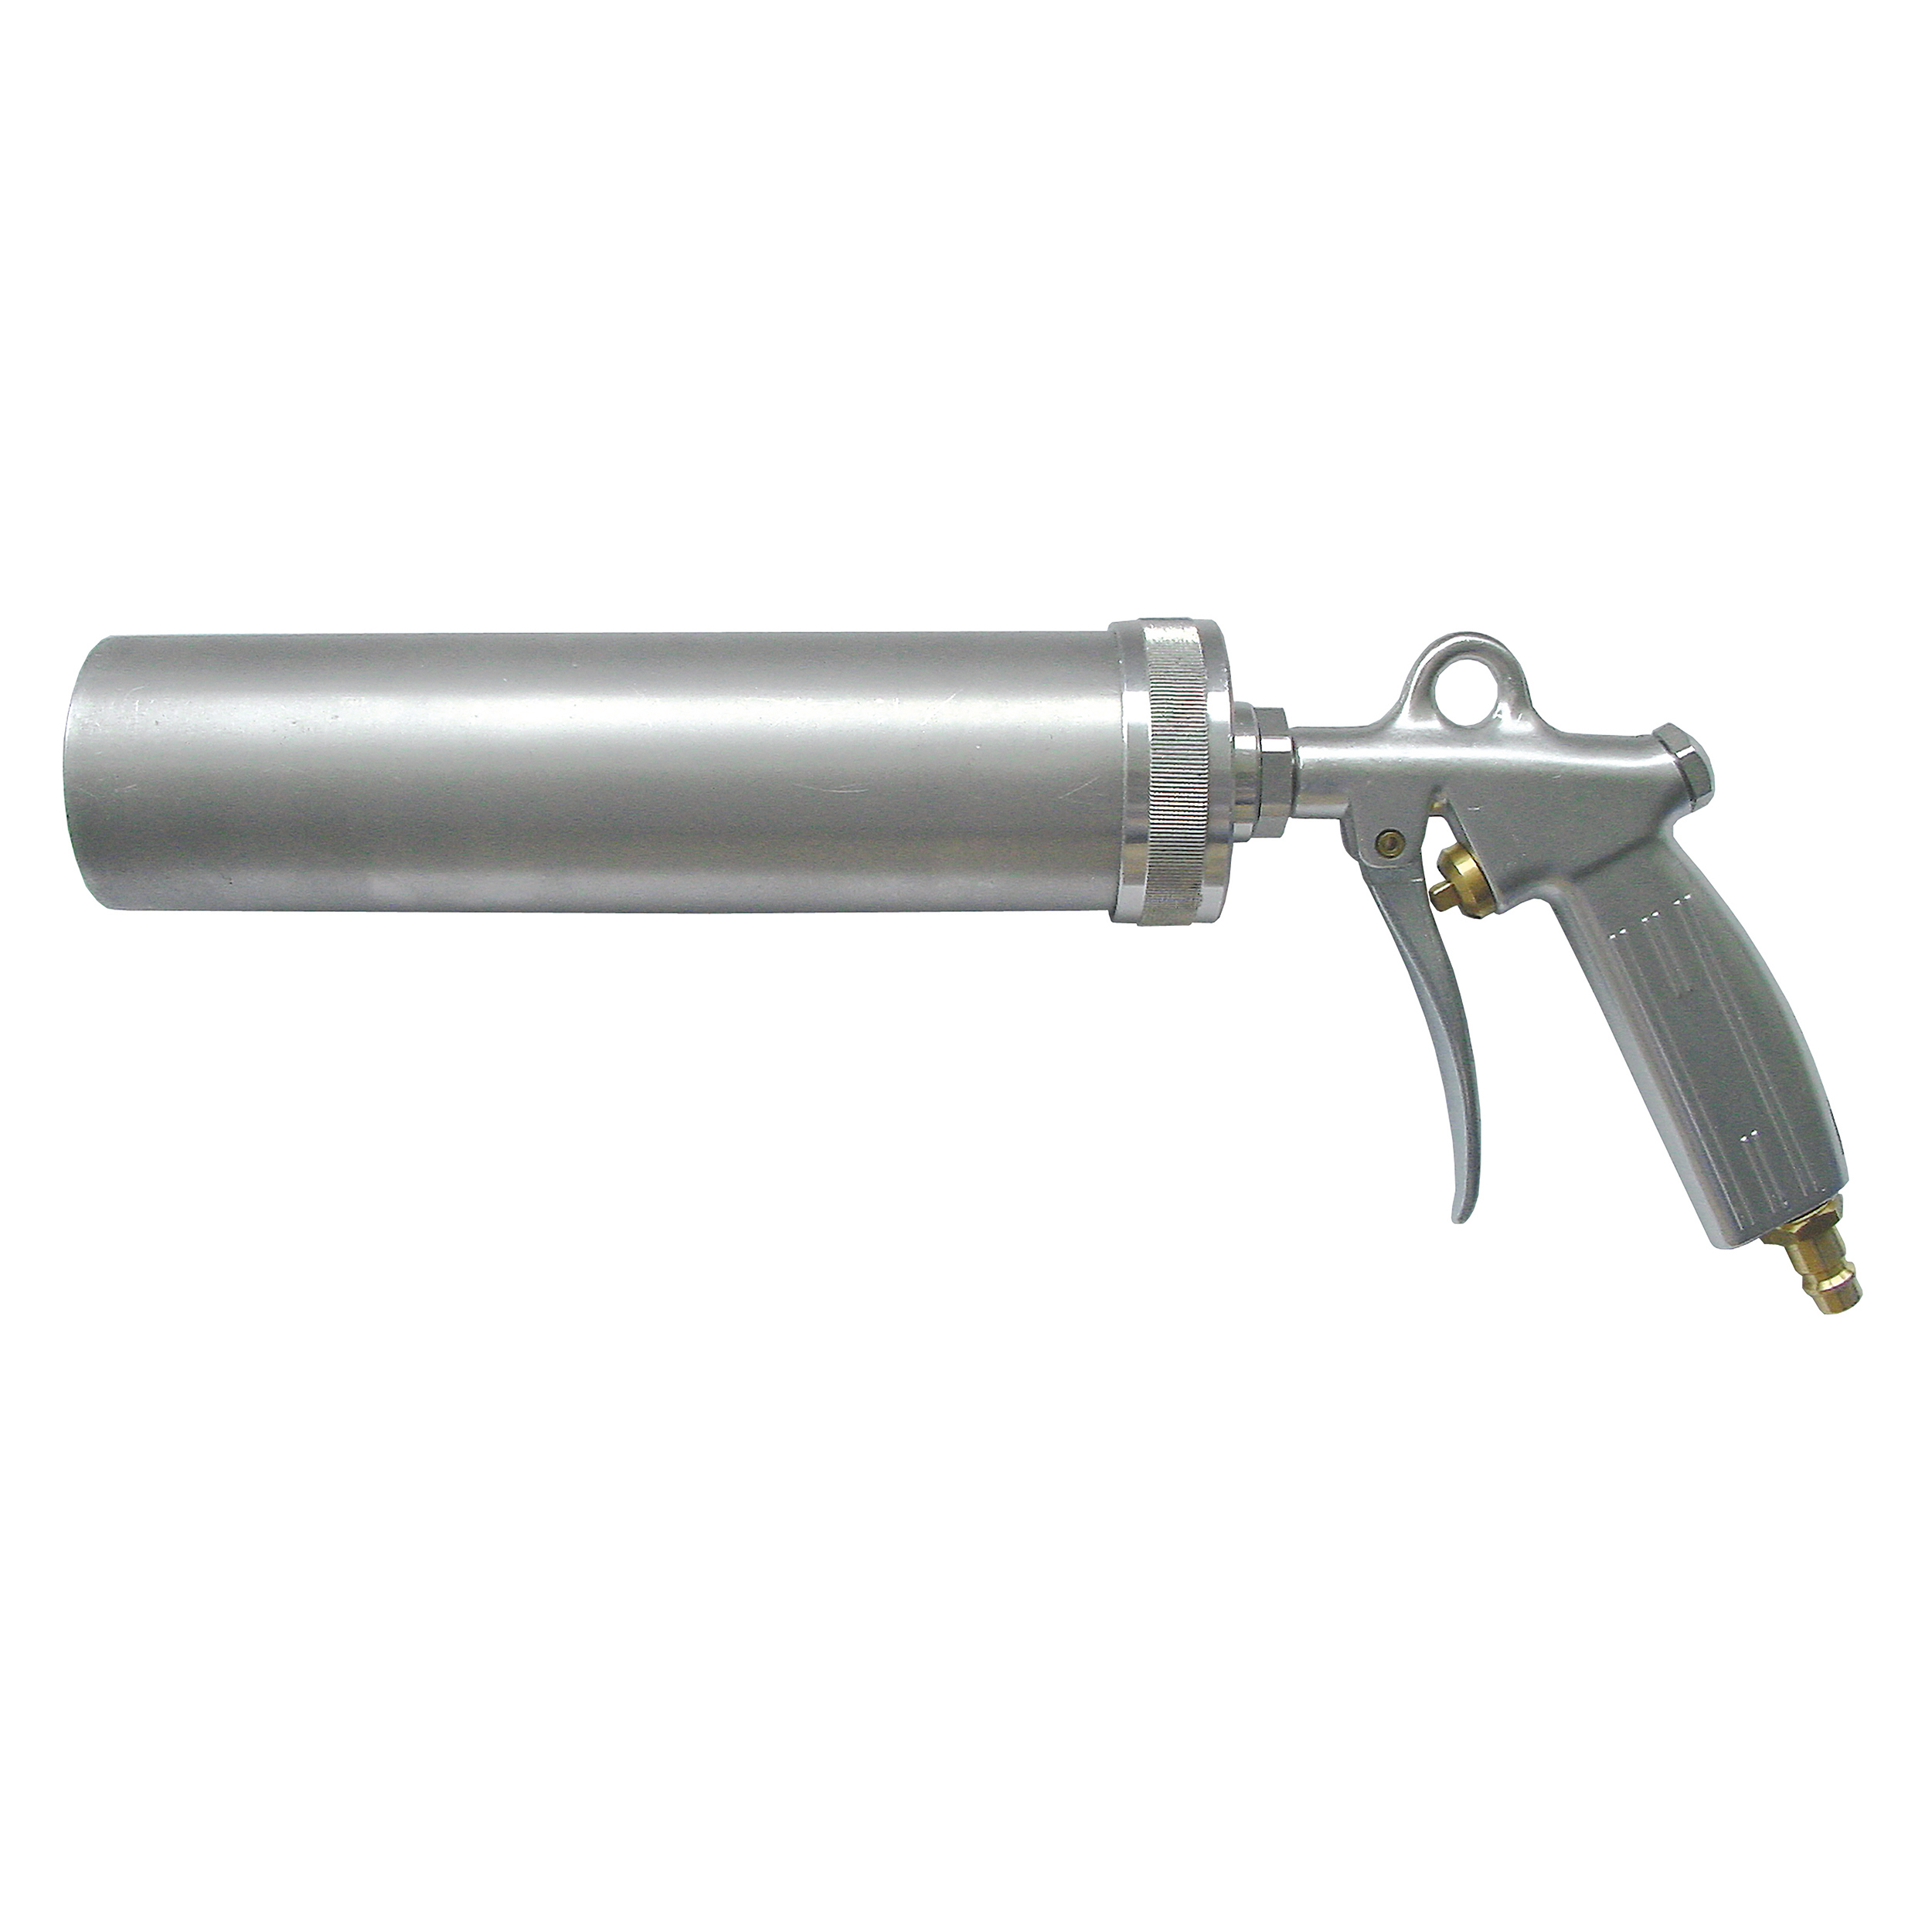 Compressed air cartridge gun, gun body: forged aluminum, coupling plug DN 7.2, cartridge, MOP 145 psi, weight: 660 g